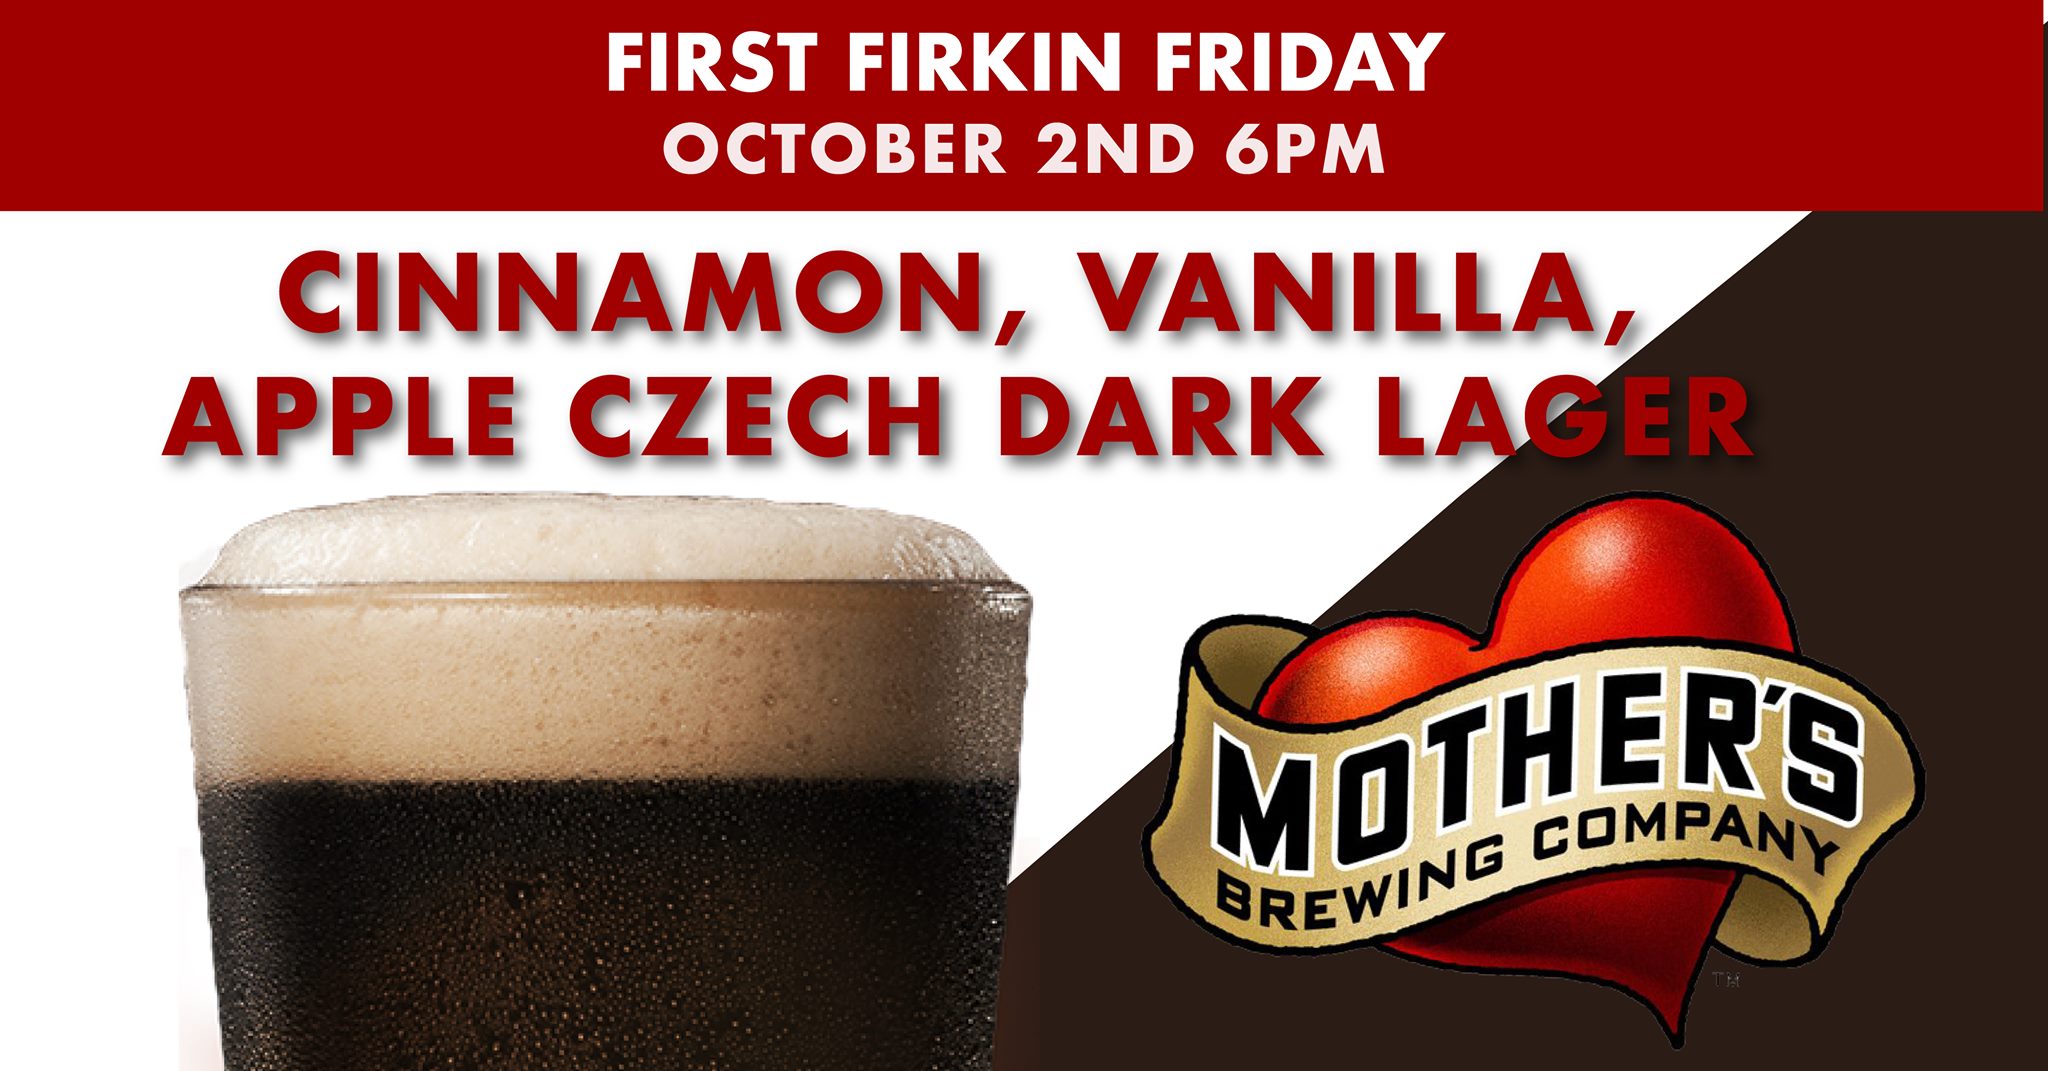 Mother's Brewing Company First Firkin Friday: Cinnamon, Vanilla, Apple Czech Dark Lager